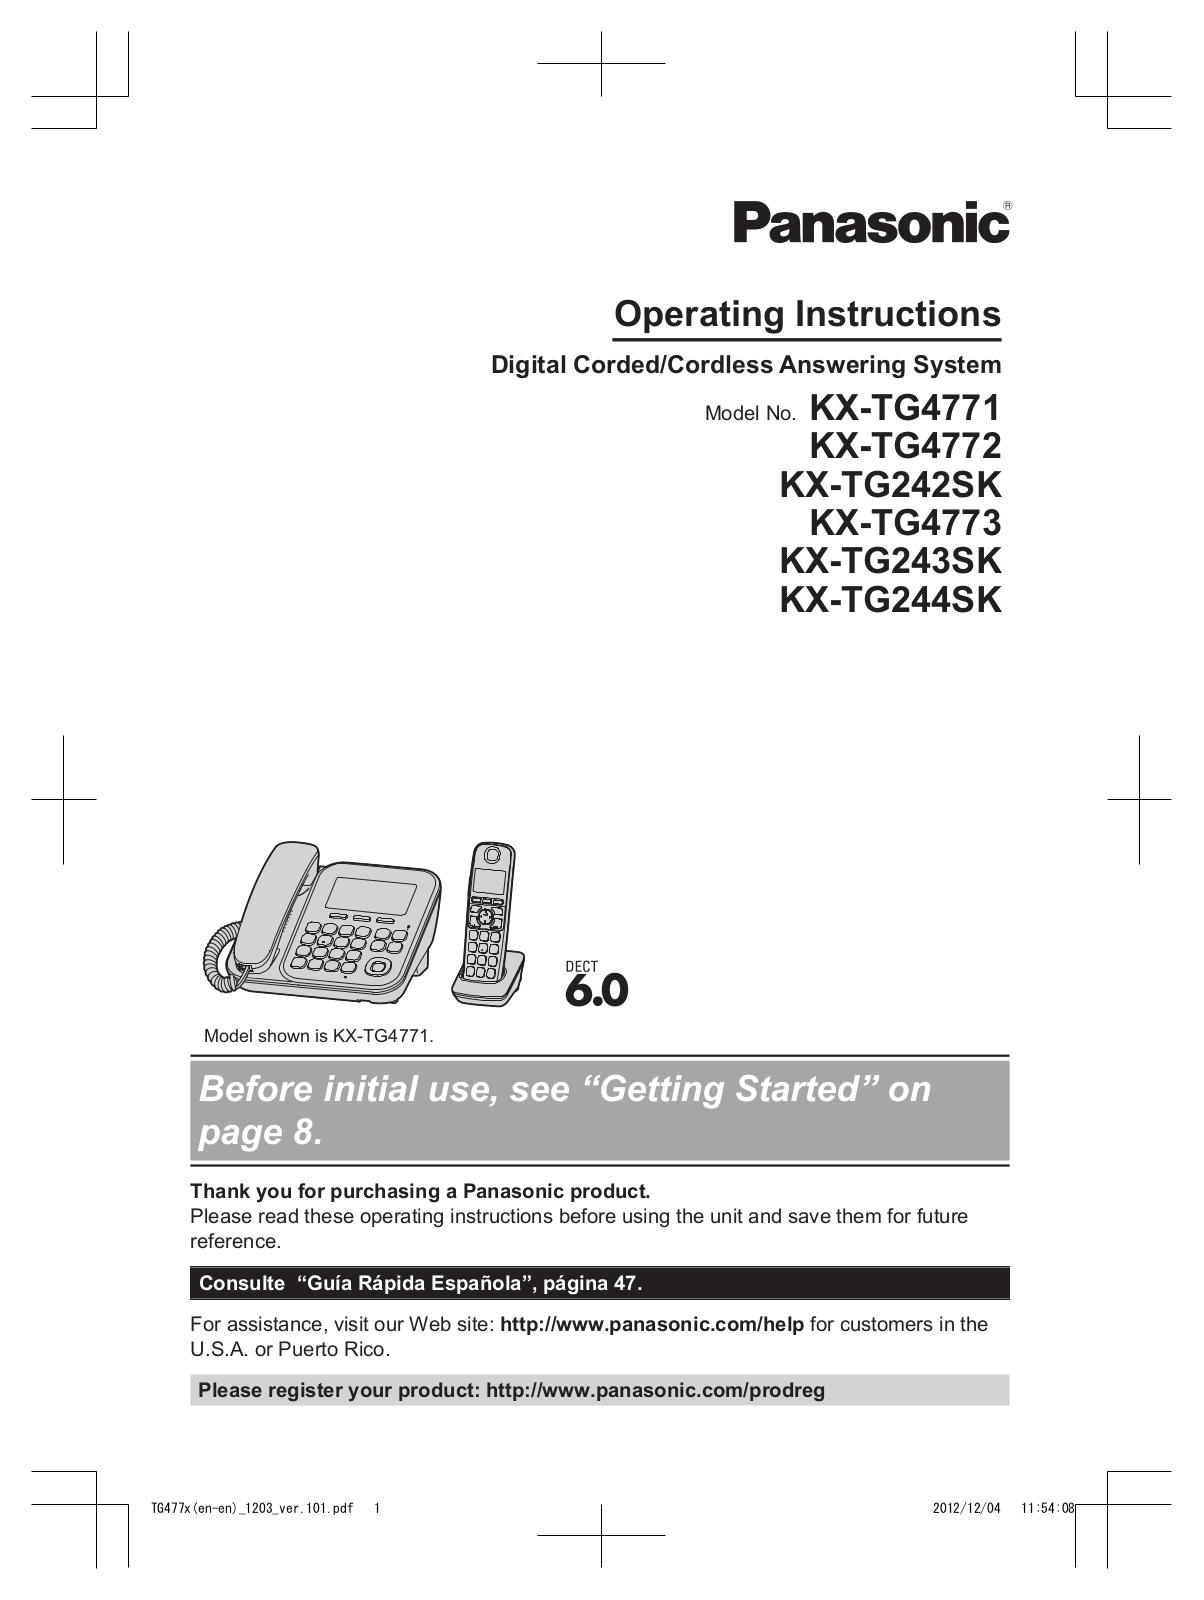 Panasonic KX-TG244SK Operating Instructions